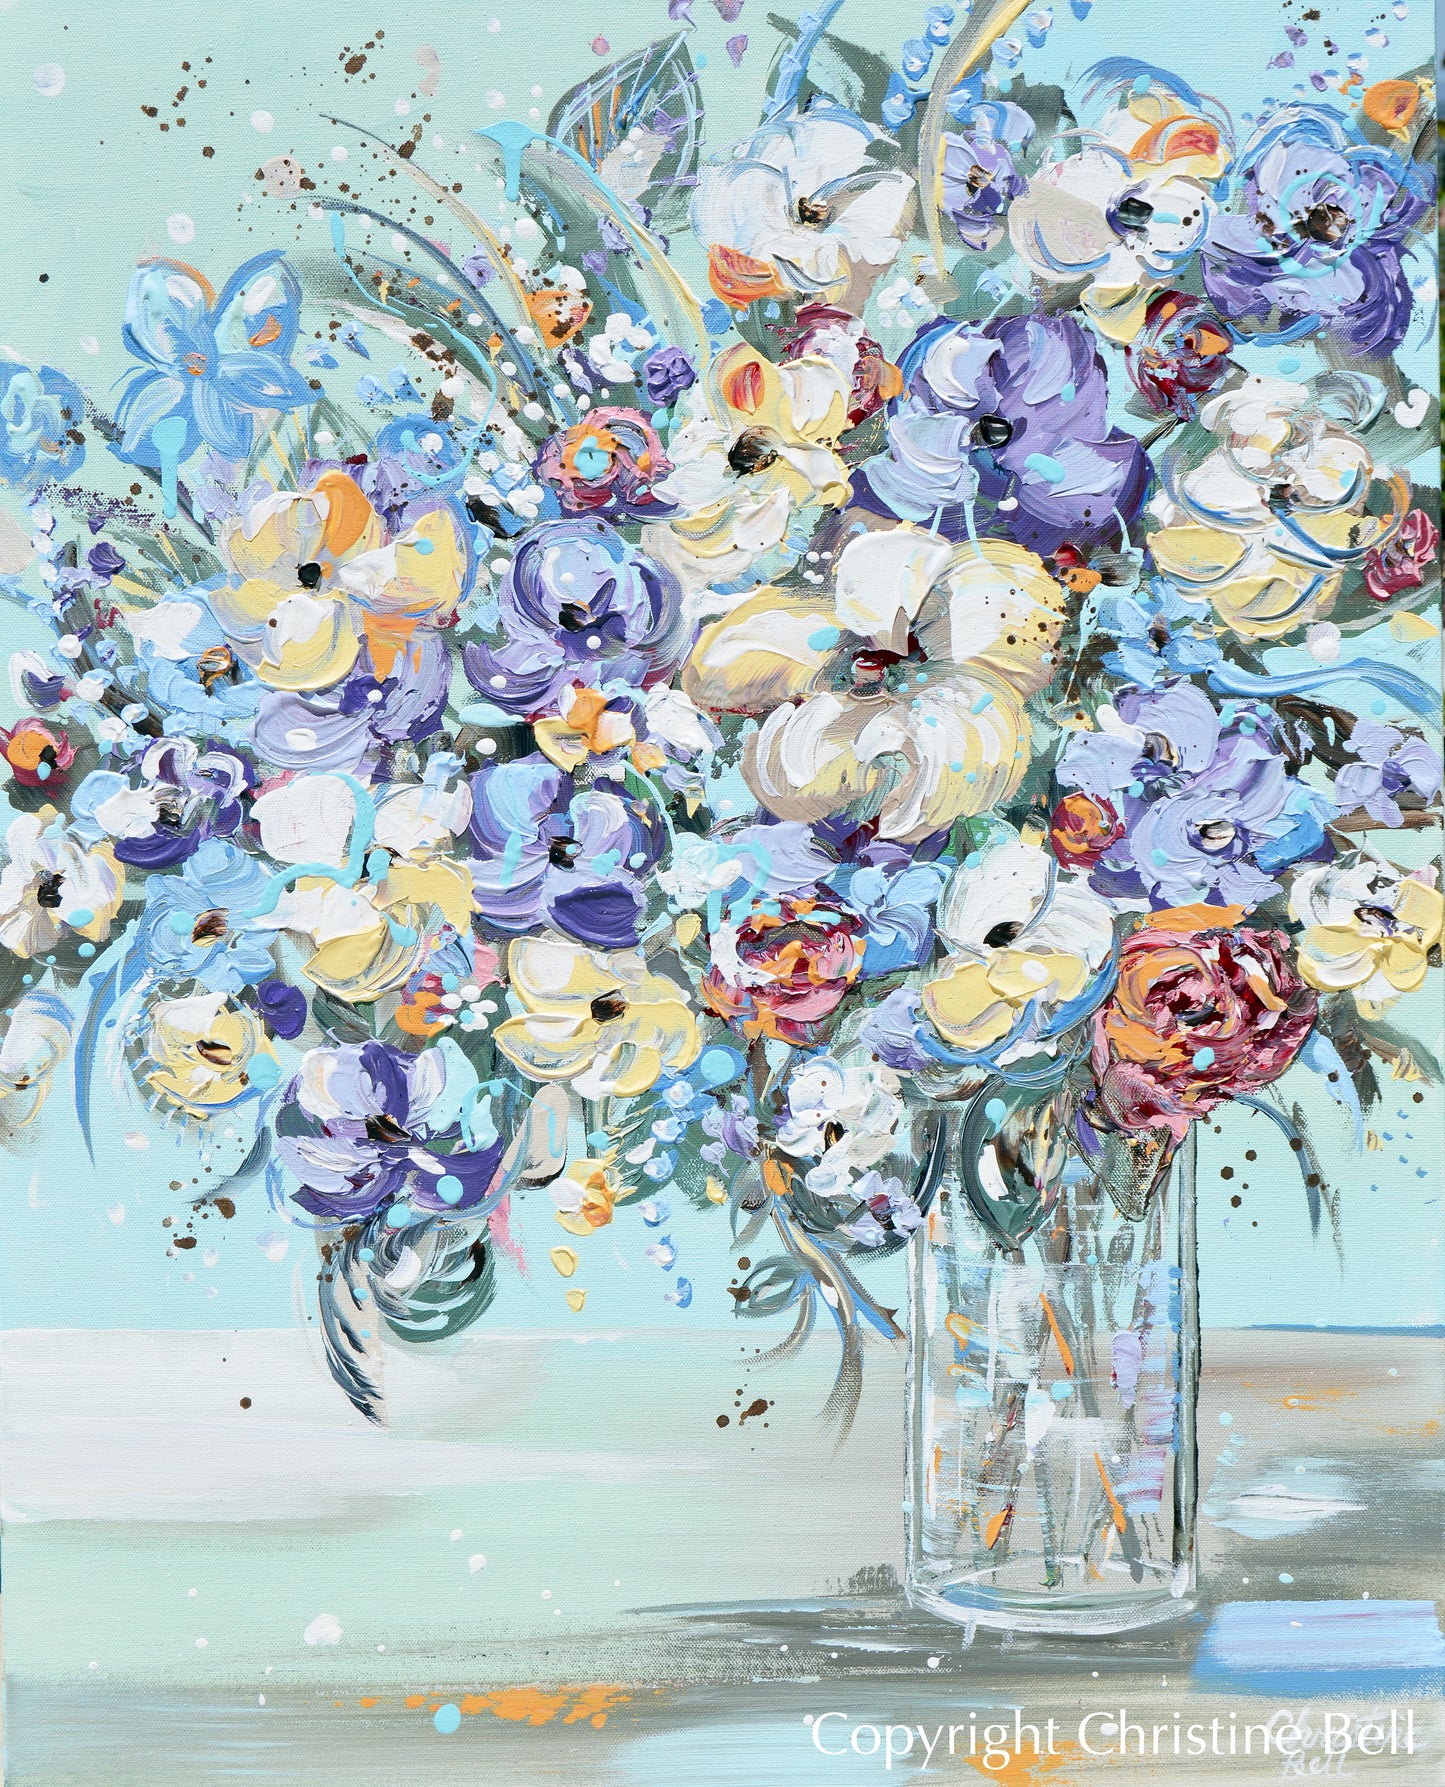 "Petals of Joy" ORIGINAL Art Abstract Floral Flower Bouquet Painting Textured Wildflowers 24x30"